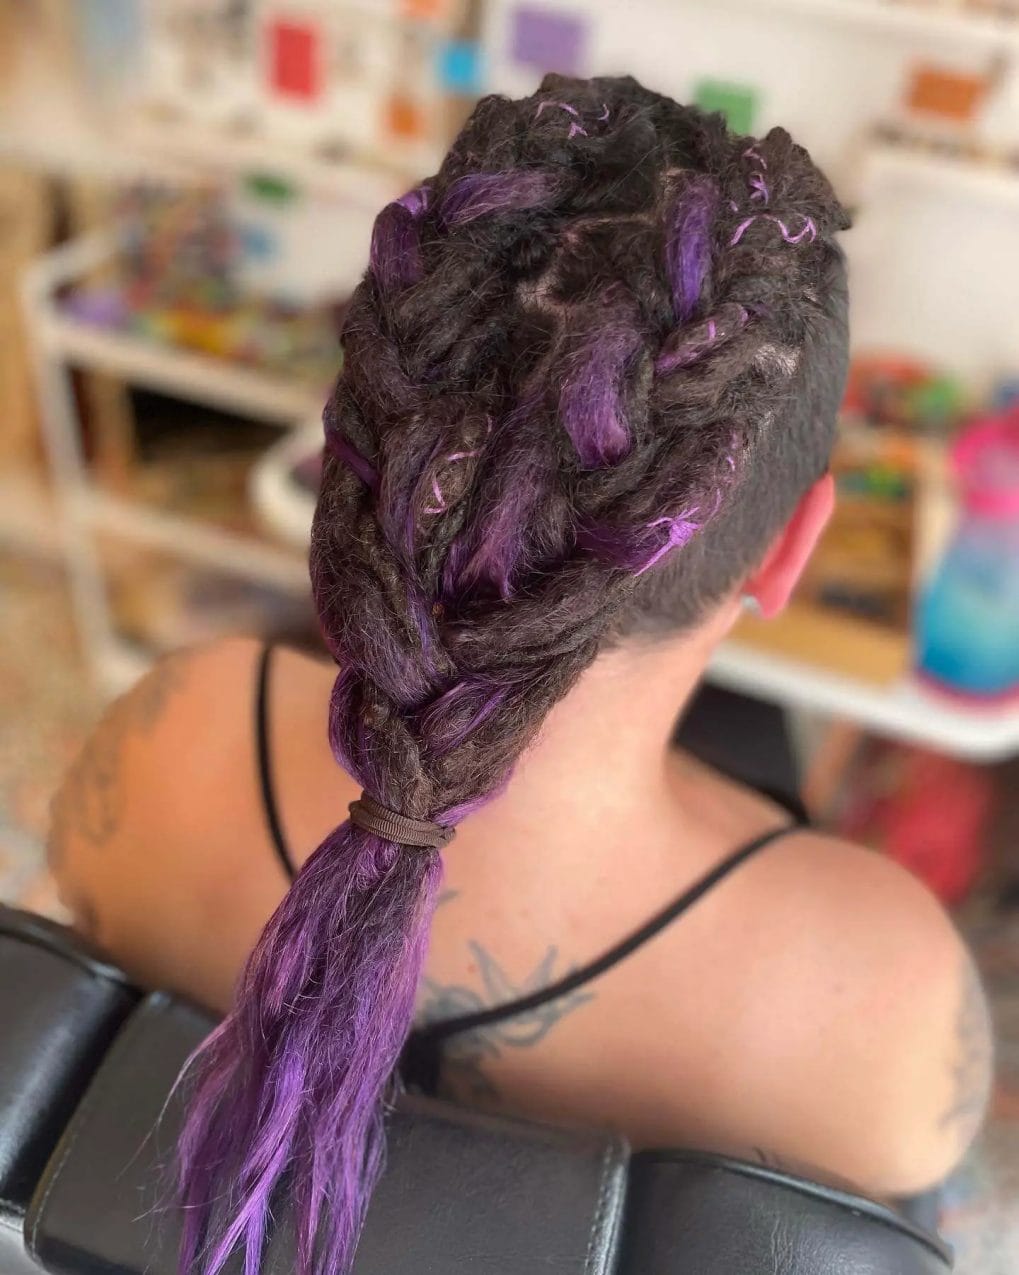 Black and purple Viking-inspired dreadlocks and braids.